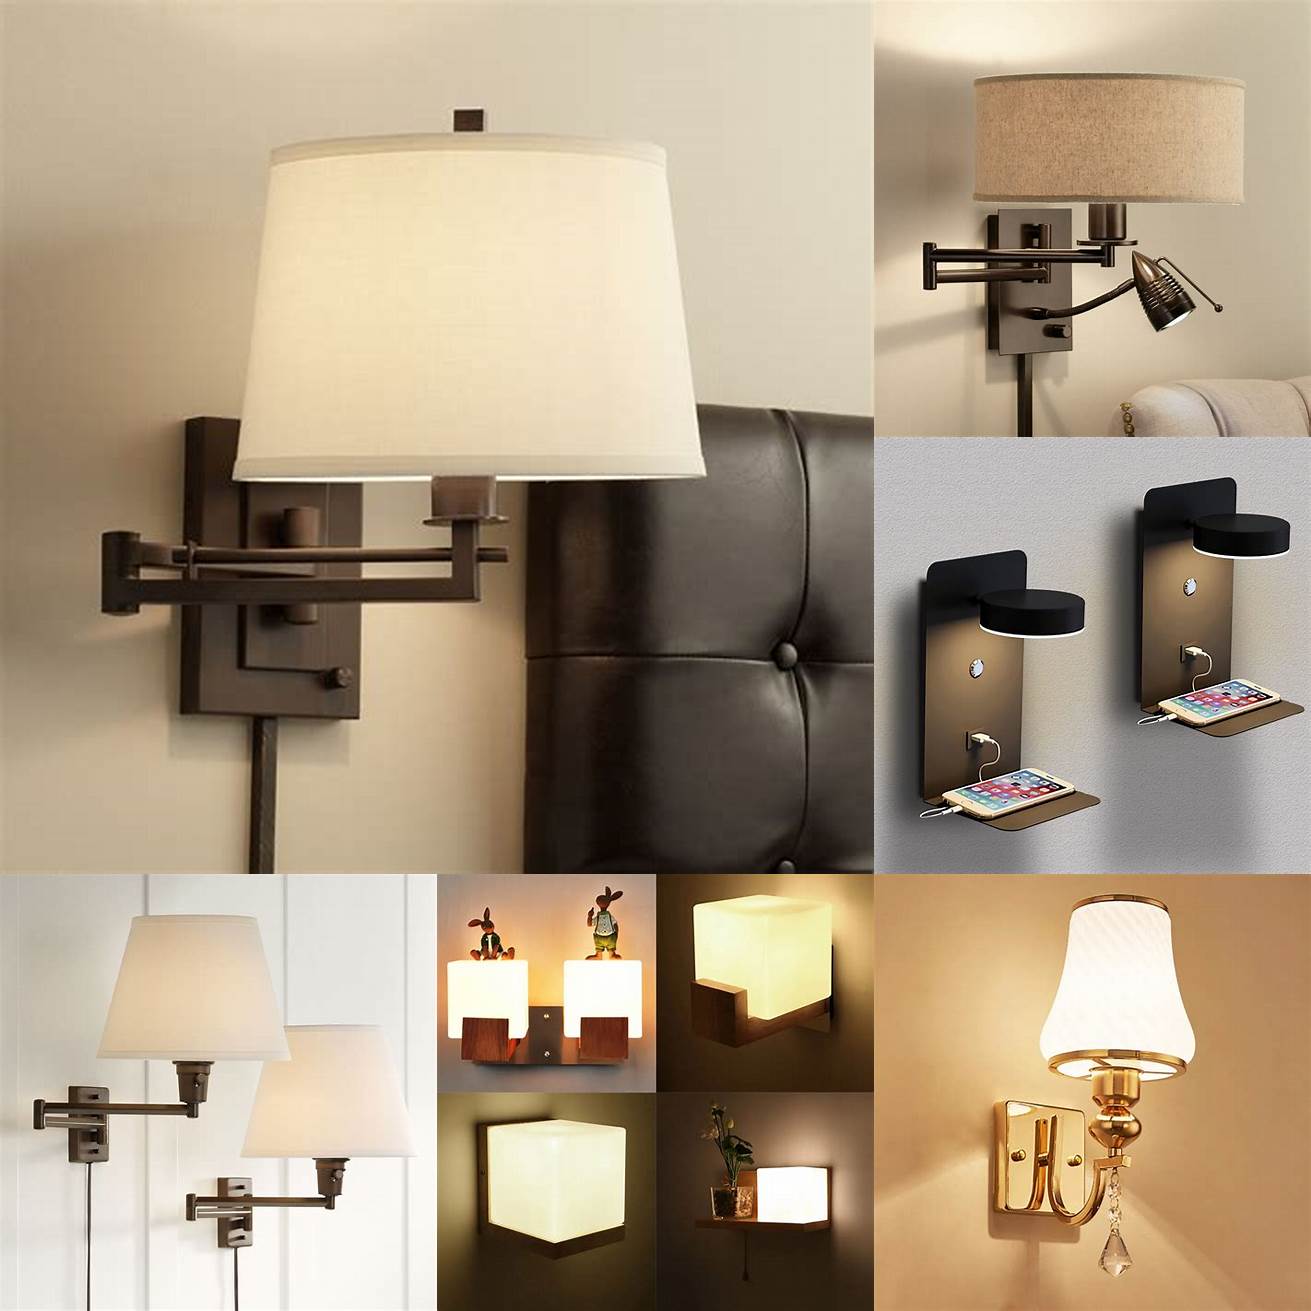 Wall-mounted bedside lamps